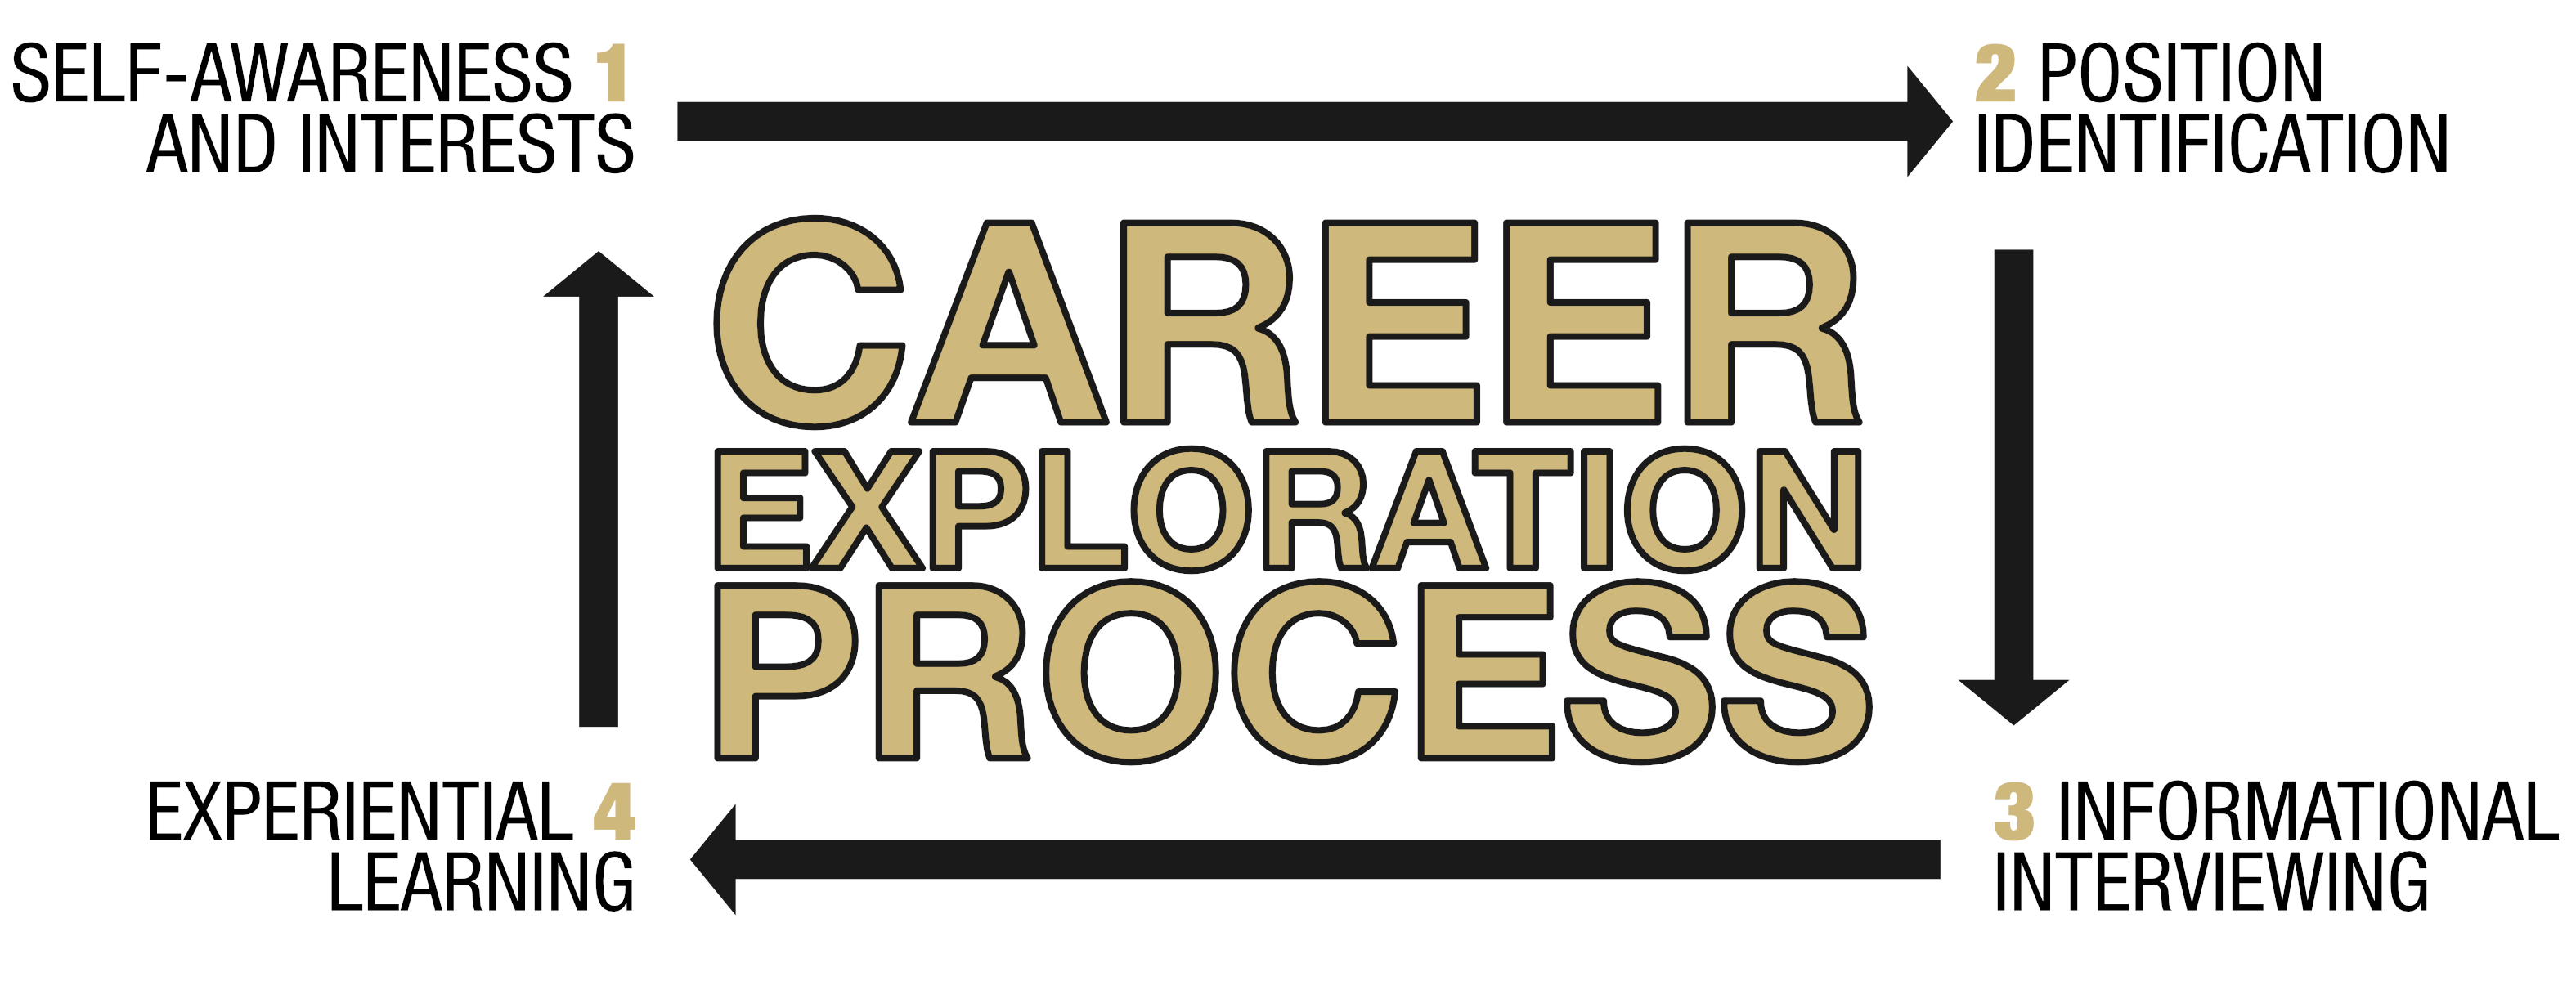 Career exploration process graphic